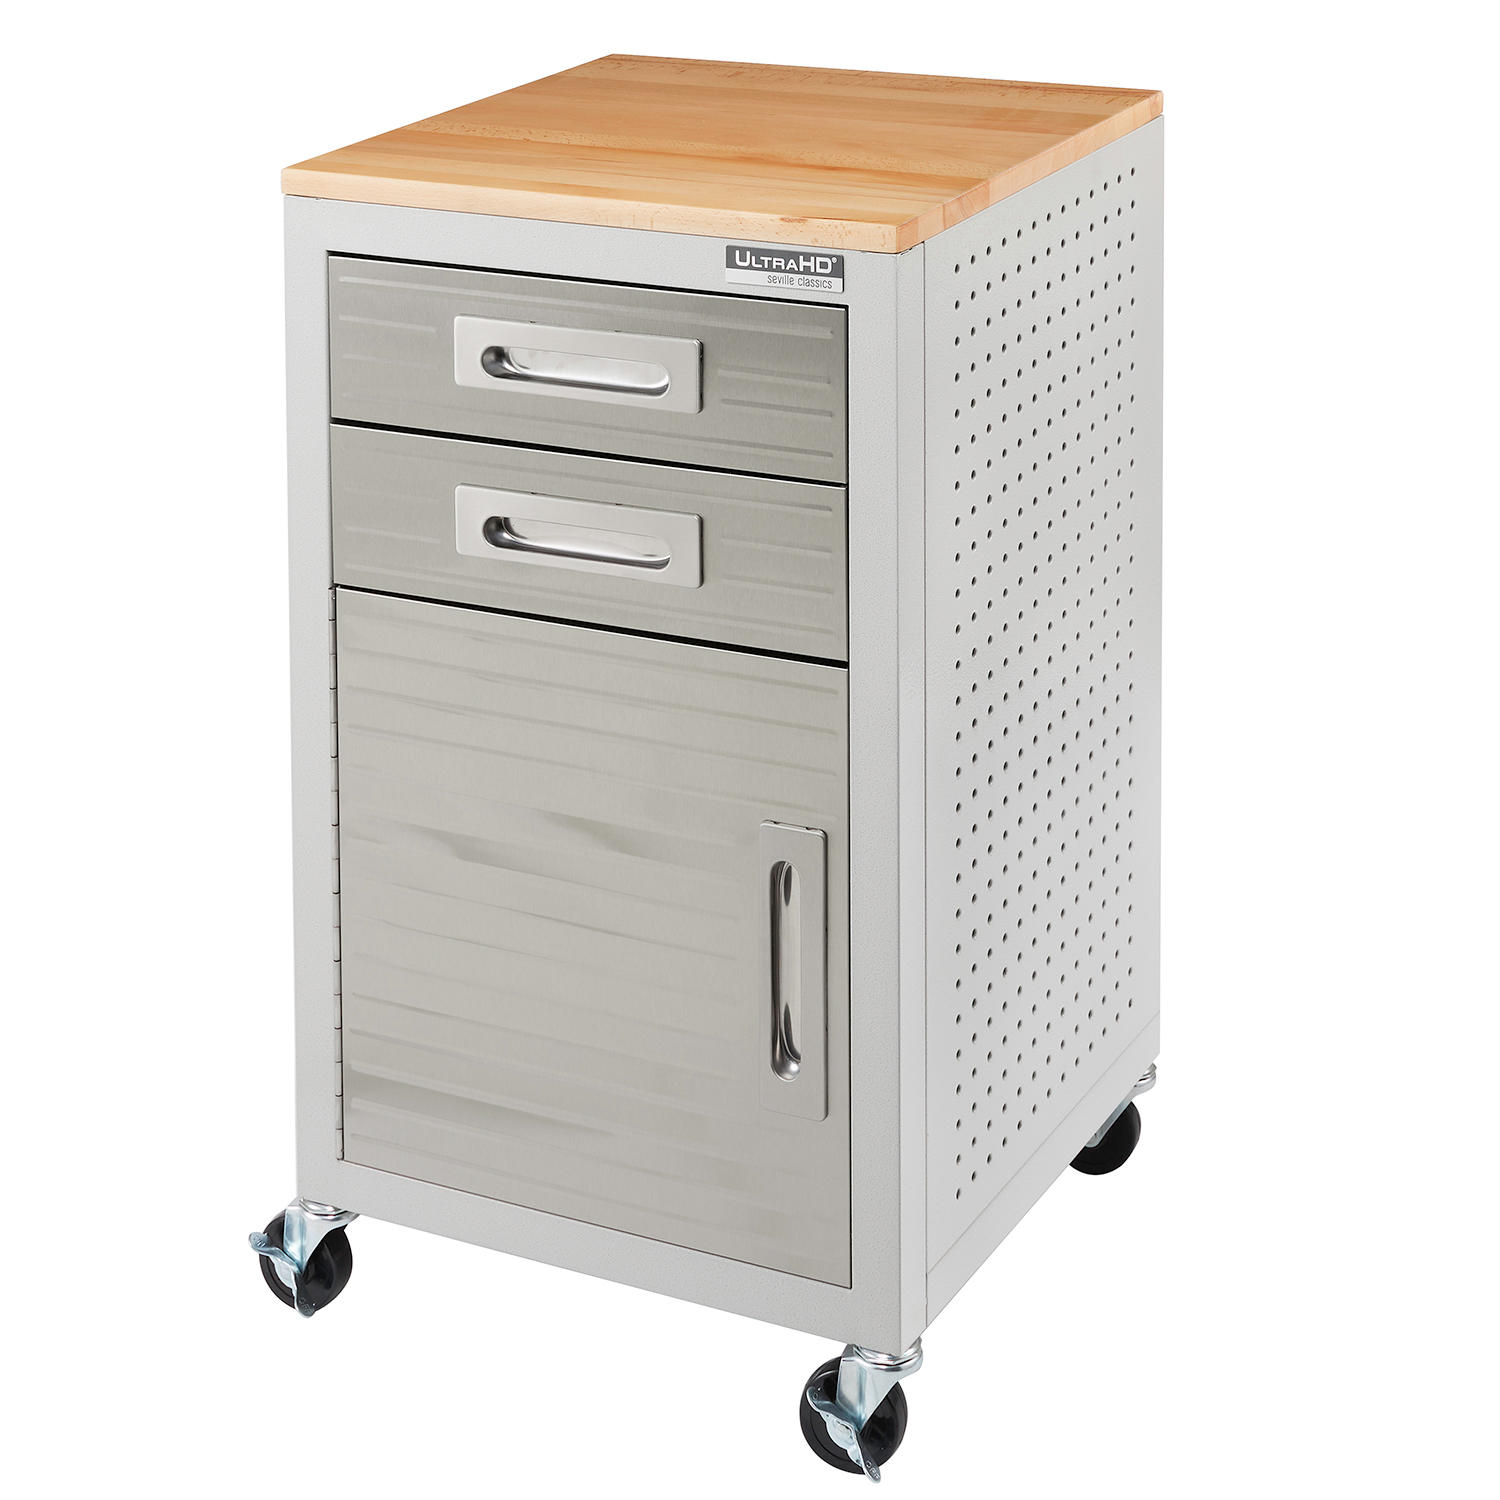 UltraHD Solid Wood Top 2-Drawer Steel Rolling File Cabinet, 20' x 18' (Granite Gray)